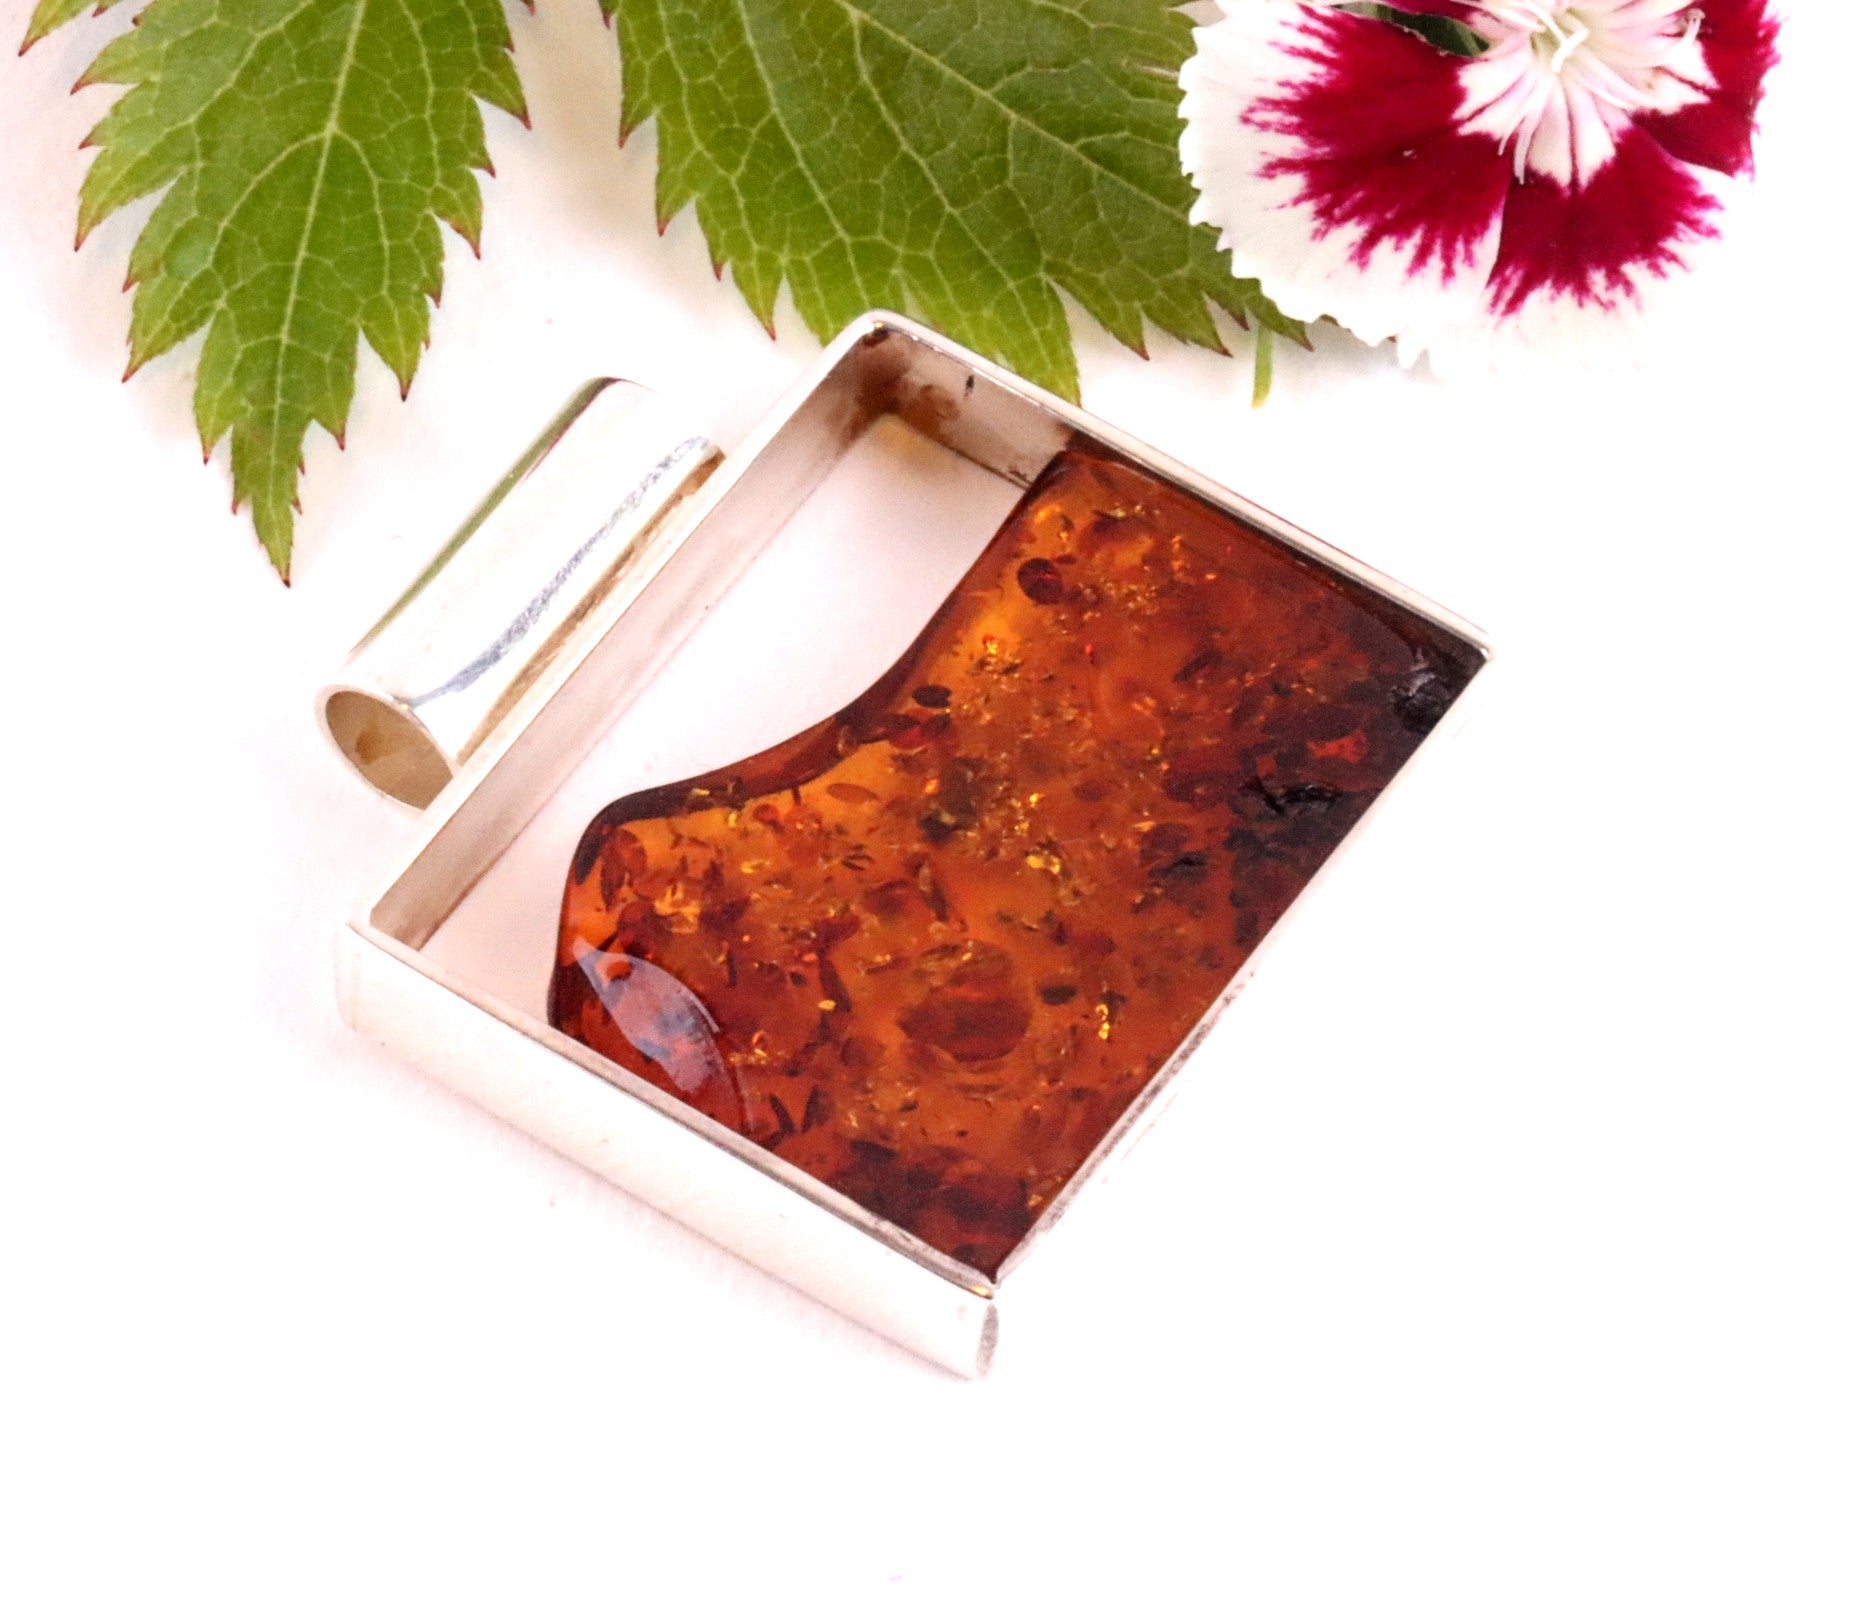 Unique Geometric Baltic Amber Pendant Unique Only One Available